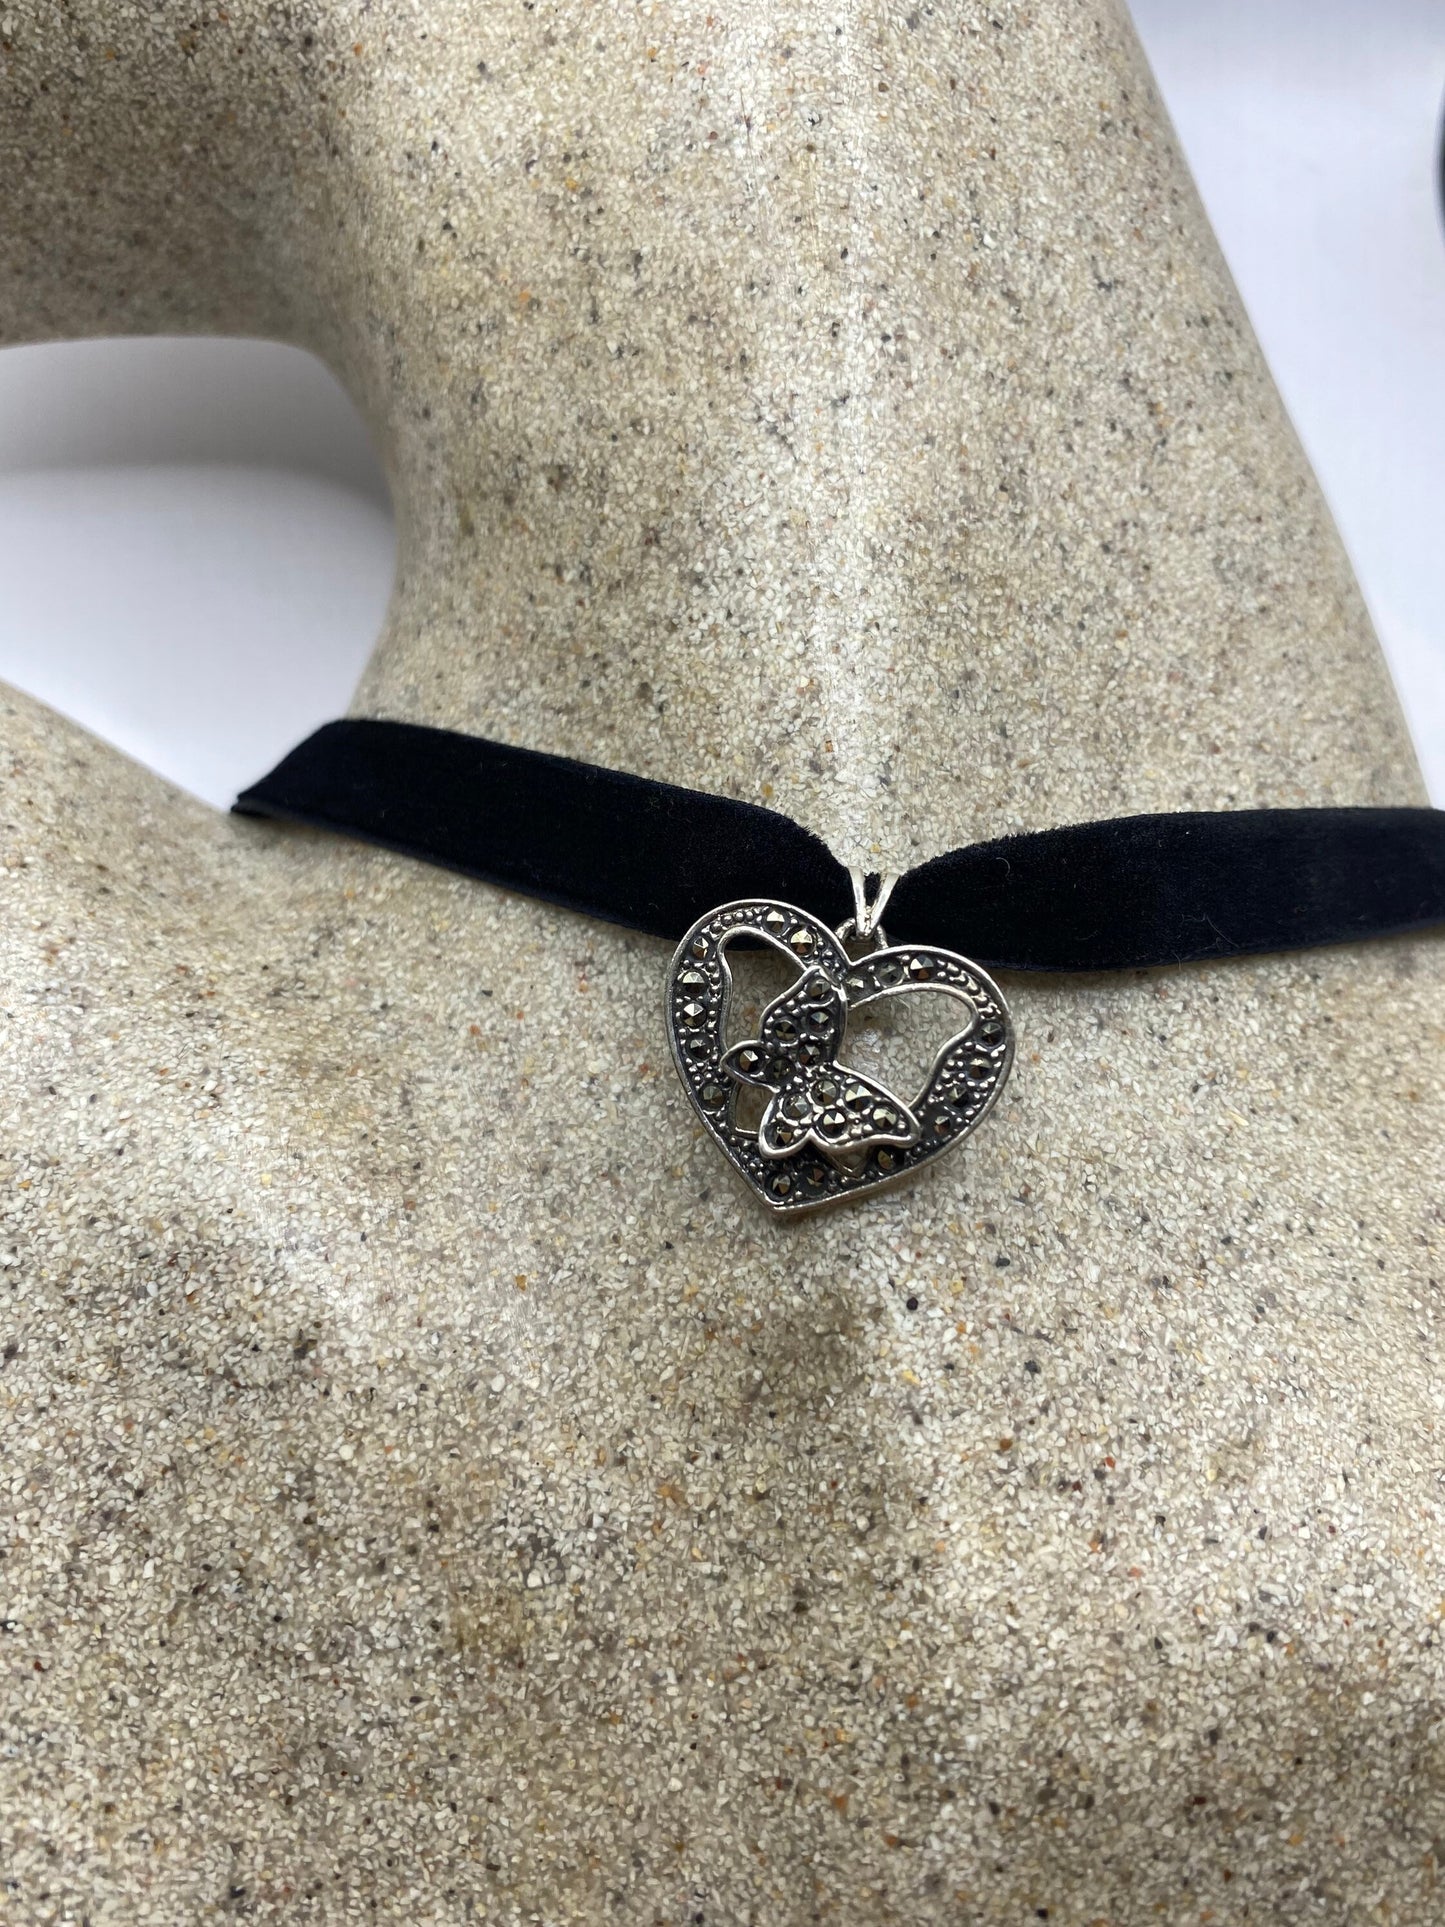 Vintage Heart Butterfly Choker 925 Sterling Silver Marcasite Pendant